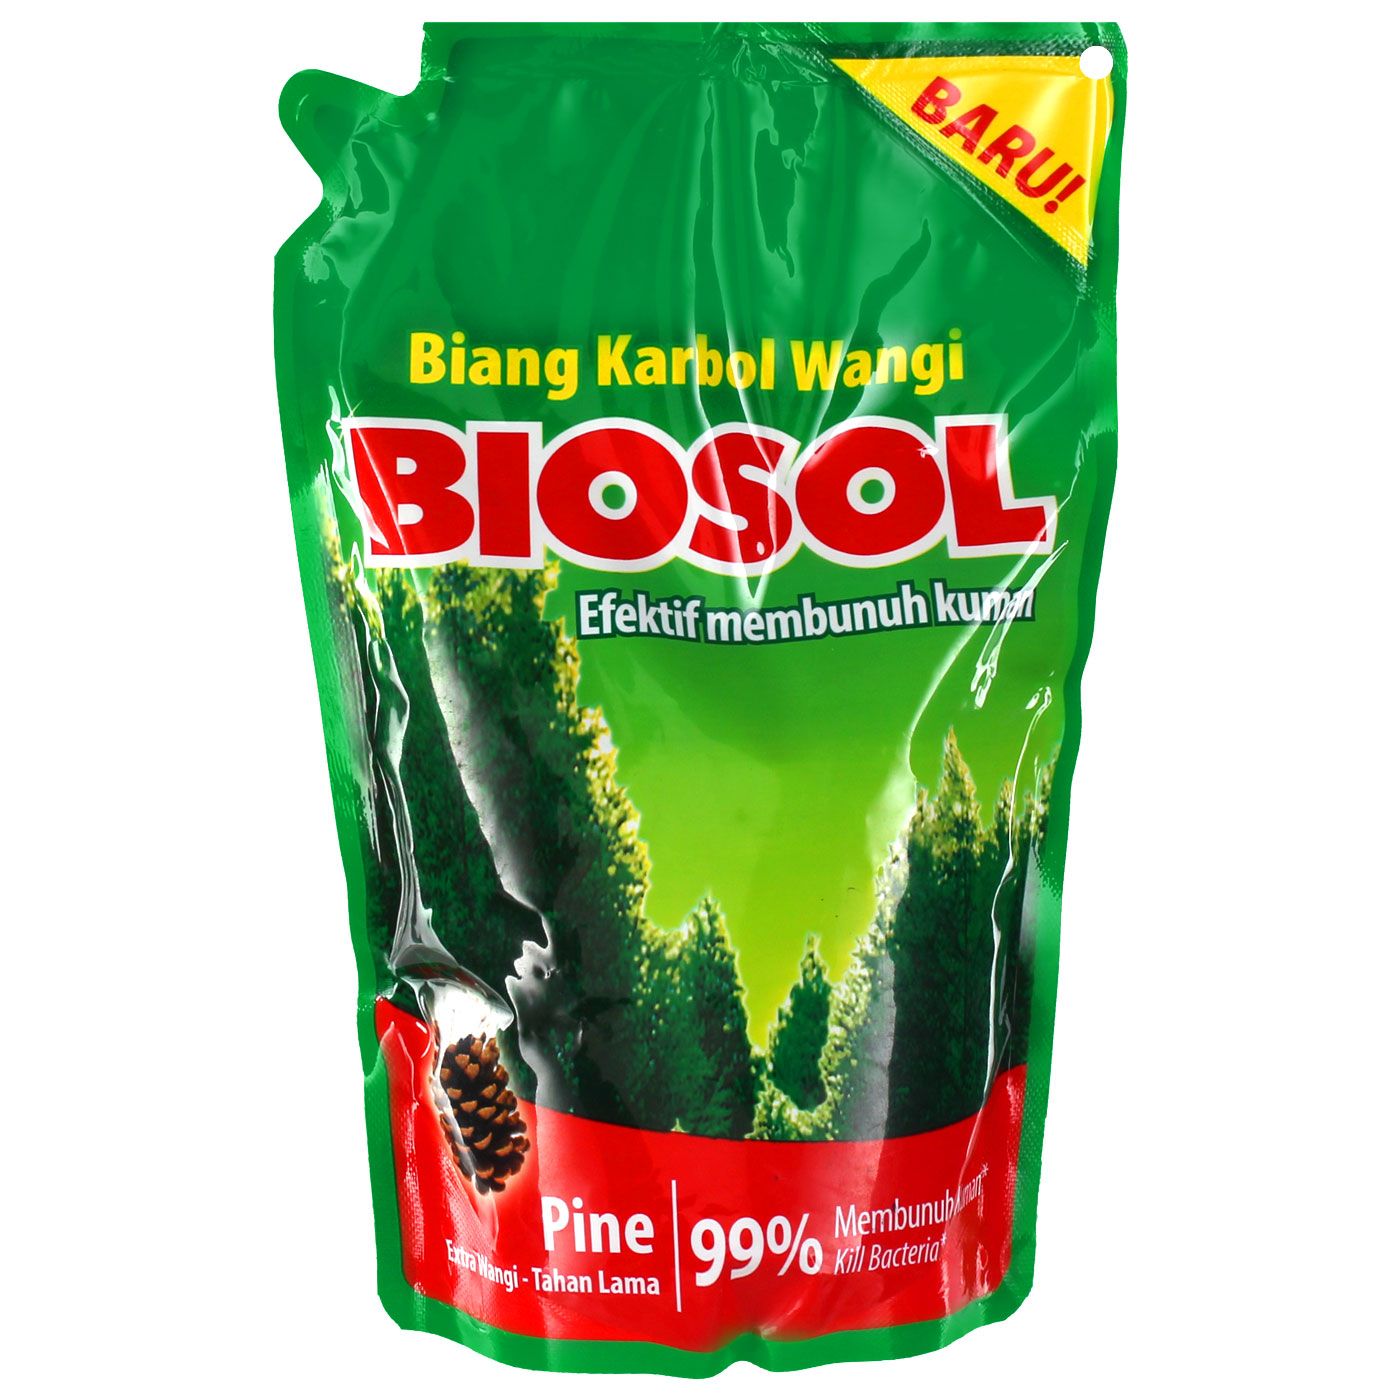 Biosol Biang Karbol Wangi Pch 700ml - 1